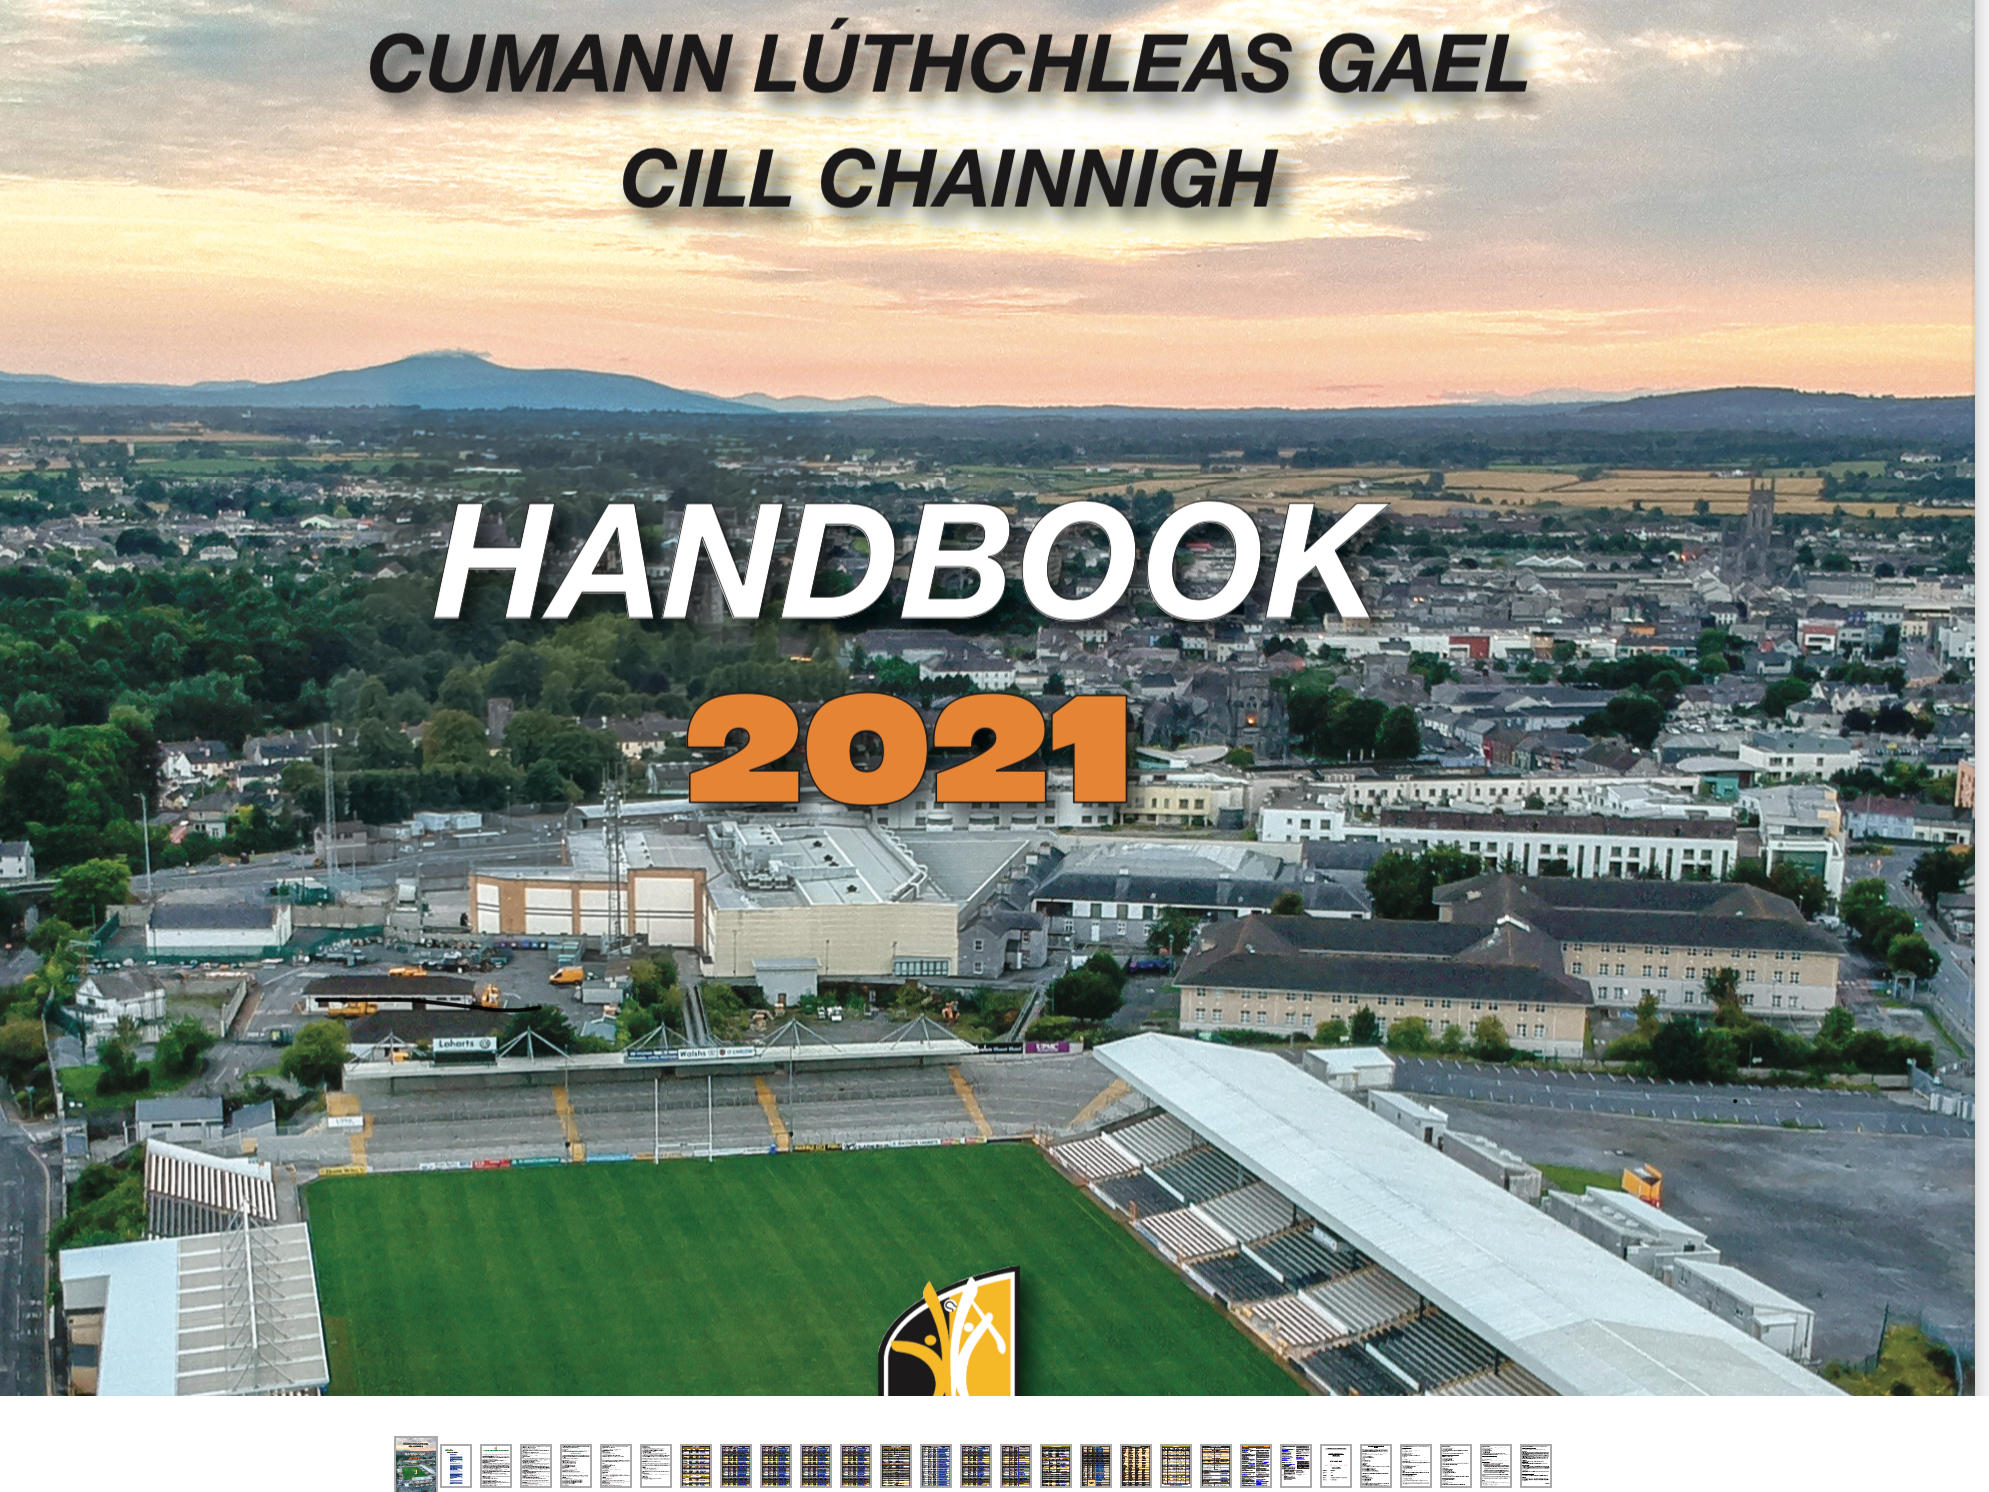 Kilkenny GAA Handbook 2021 Now Available